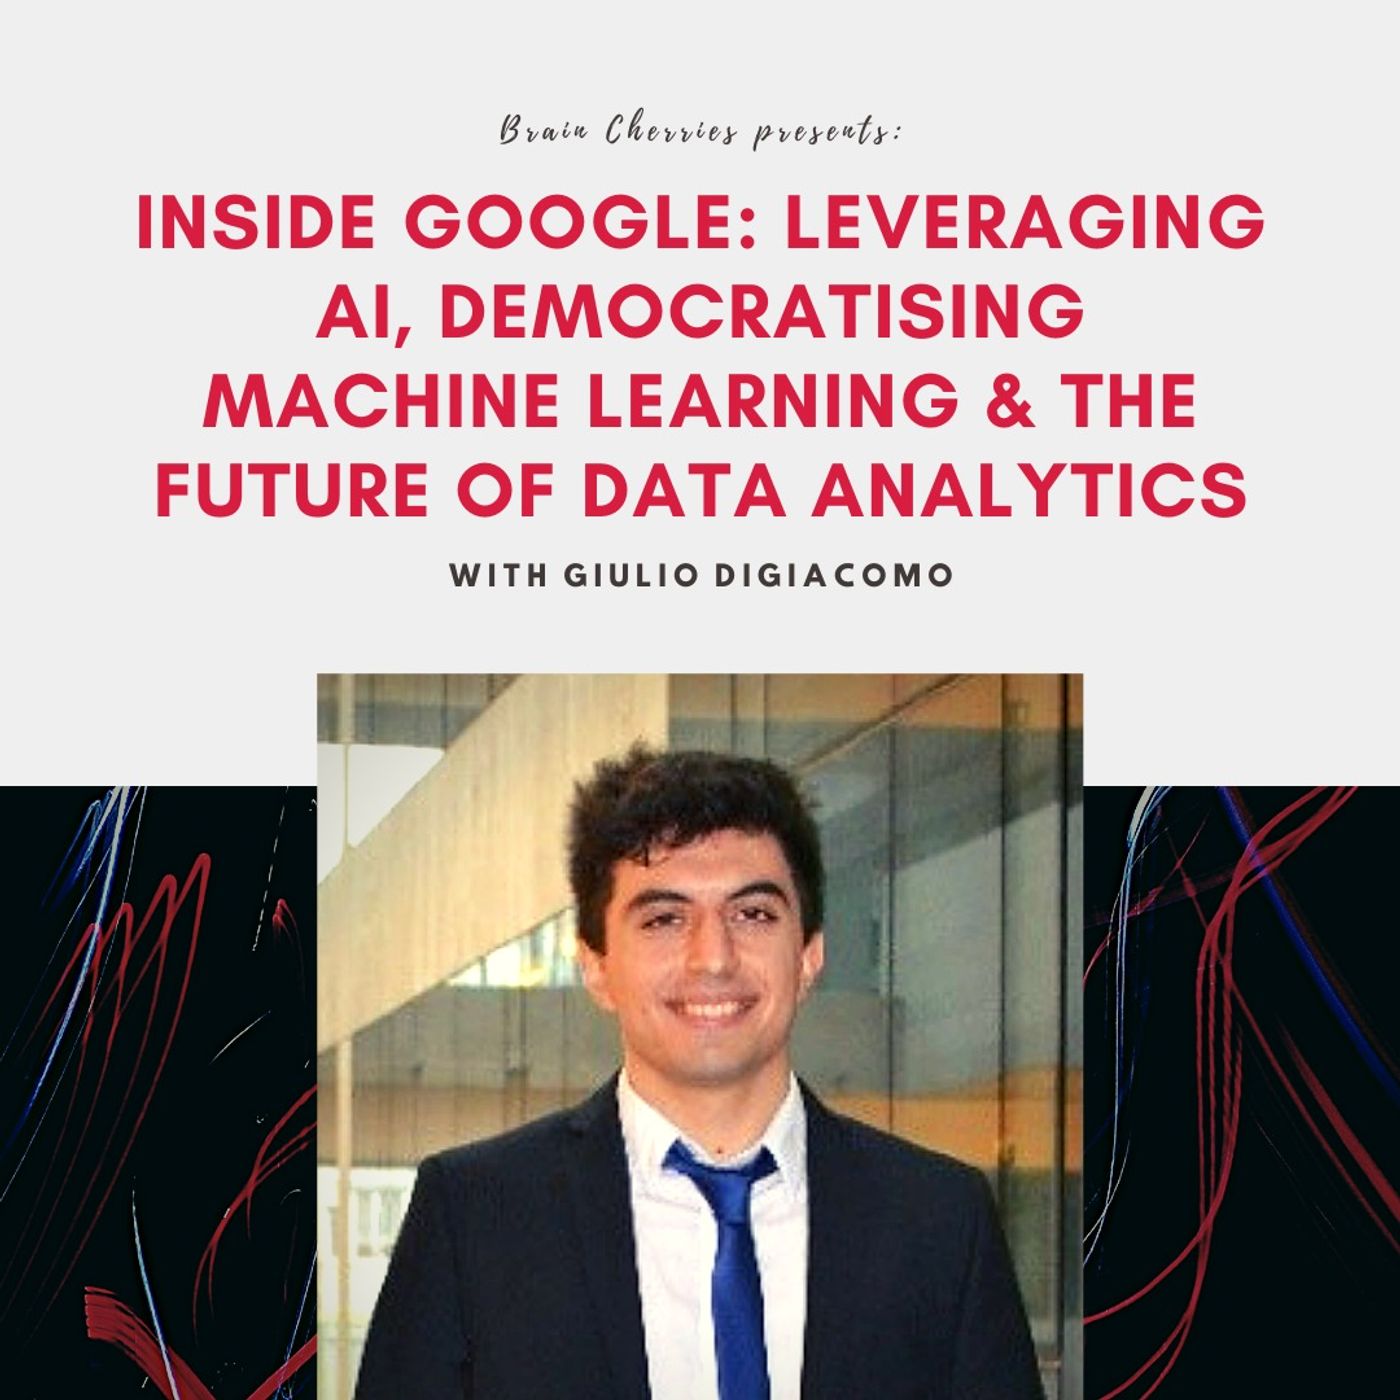 9. Inside Google: Leveraging AI, Democratising Machine Learning & The Future of Data Analytics with Giulio Digiacomo